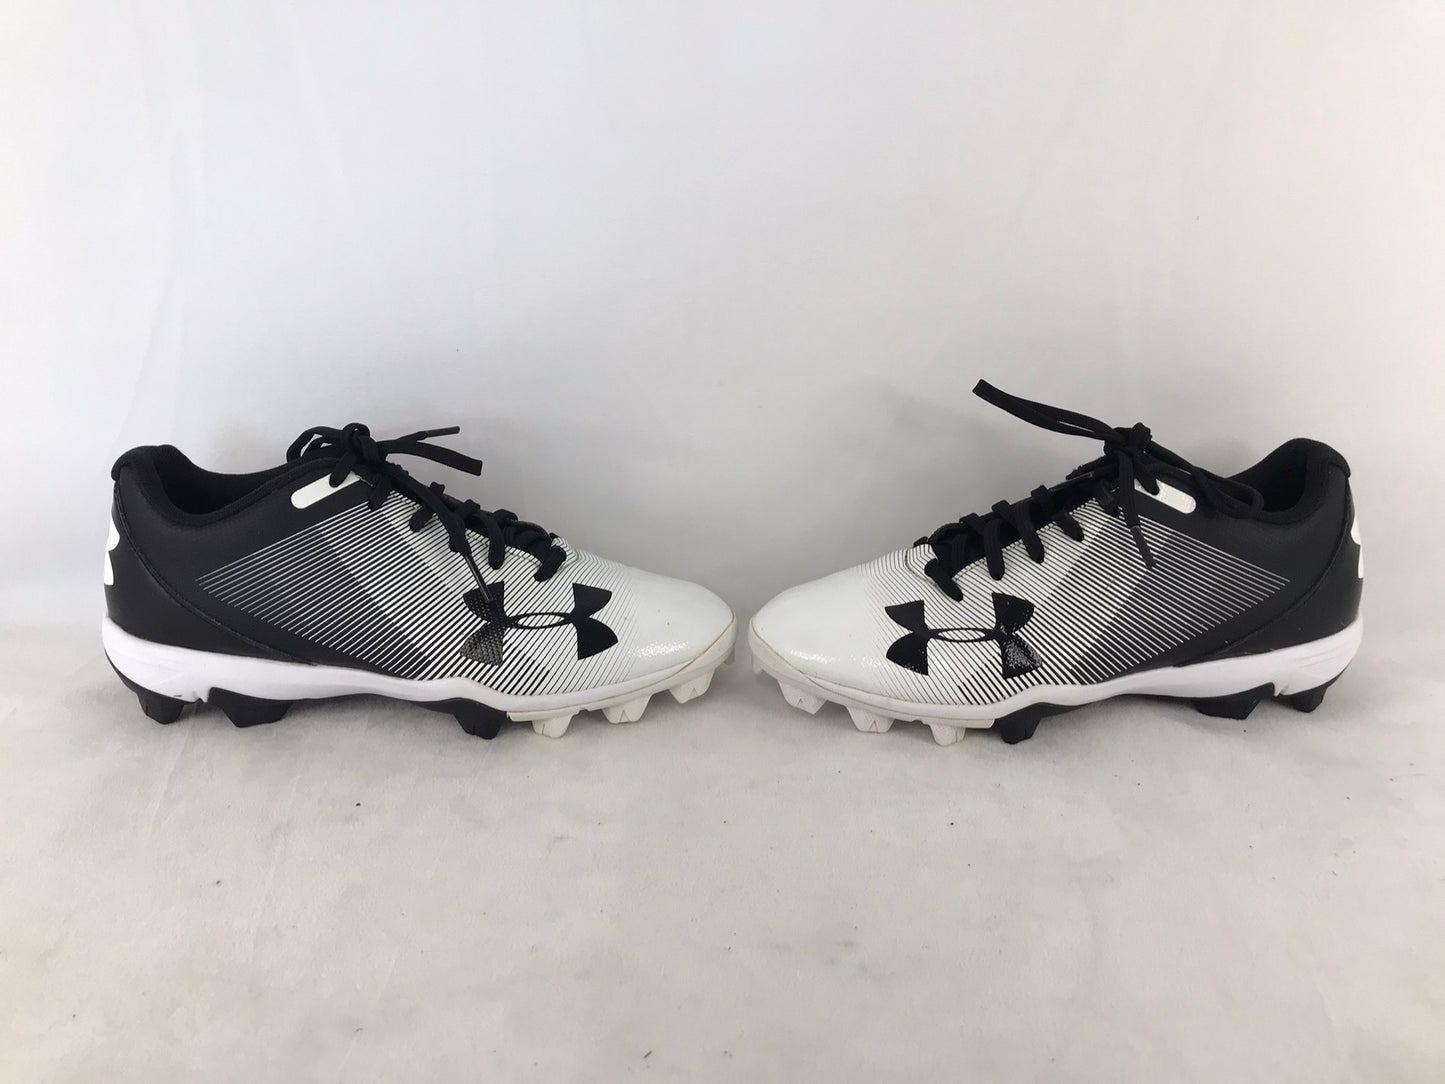 Baseball Shoes Cleats Men's Size 6.5 Under Armour Black White Excellent